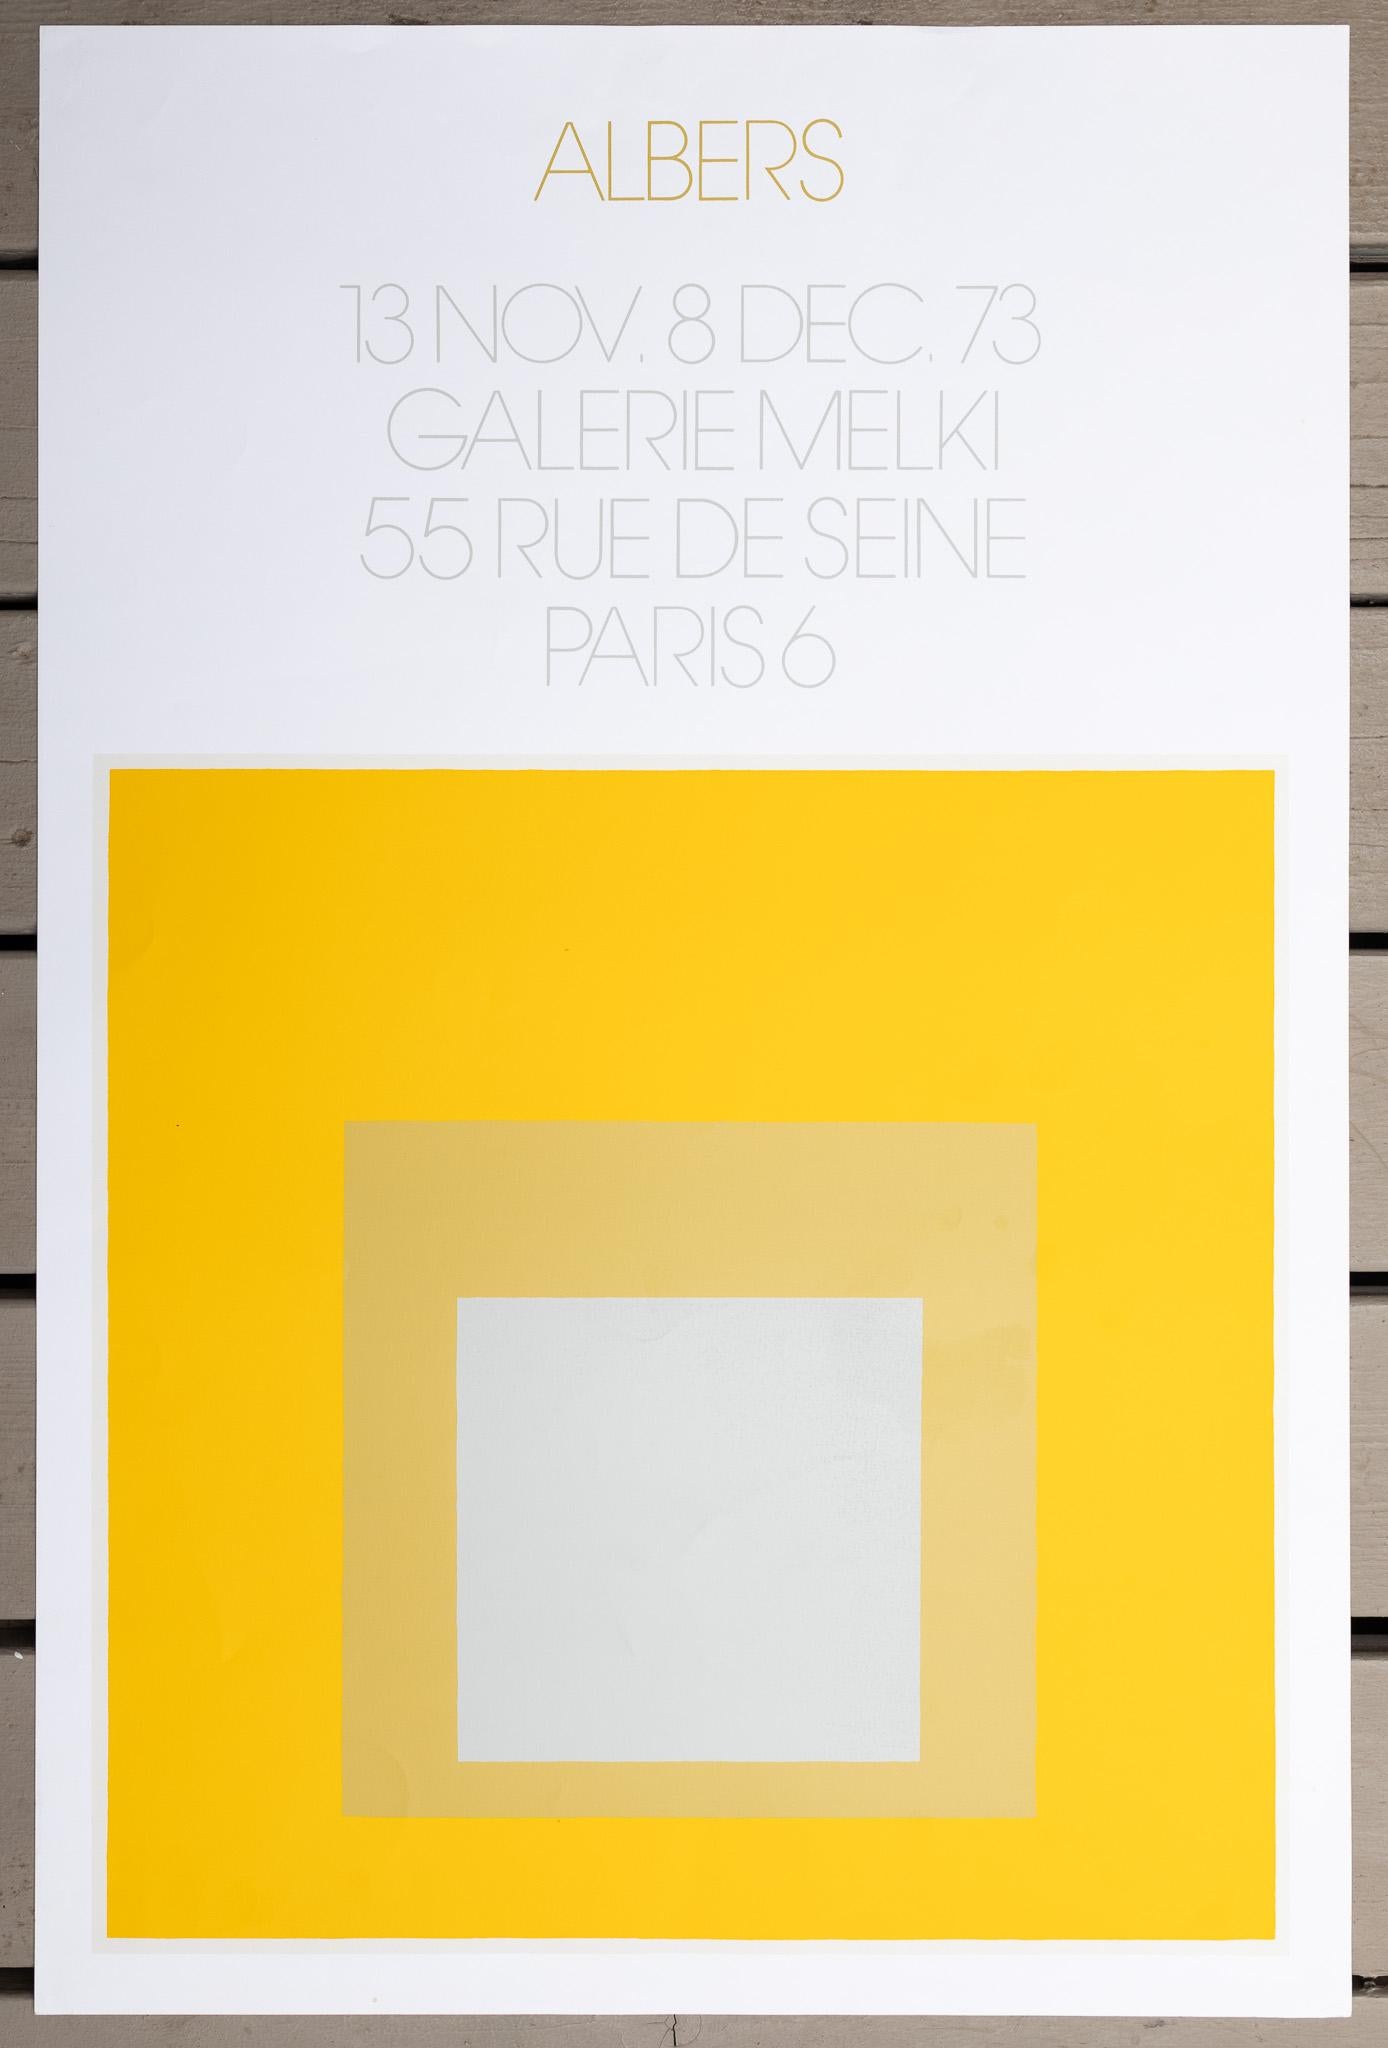 Galerie Melkie 55 Rue de Seine Paris 6 Screen Print Poster For Sale 1